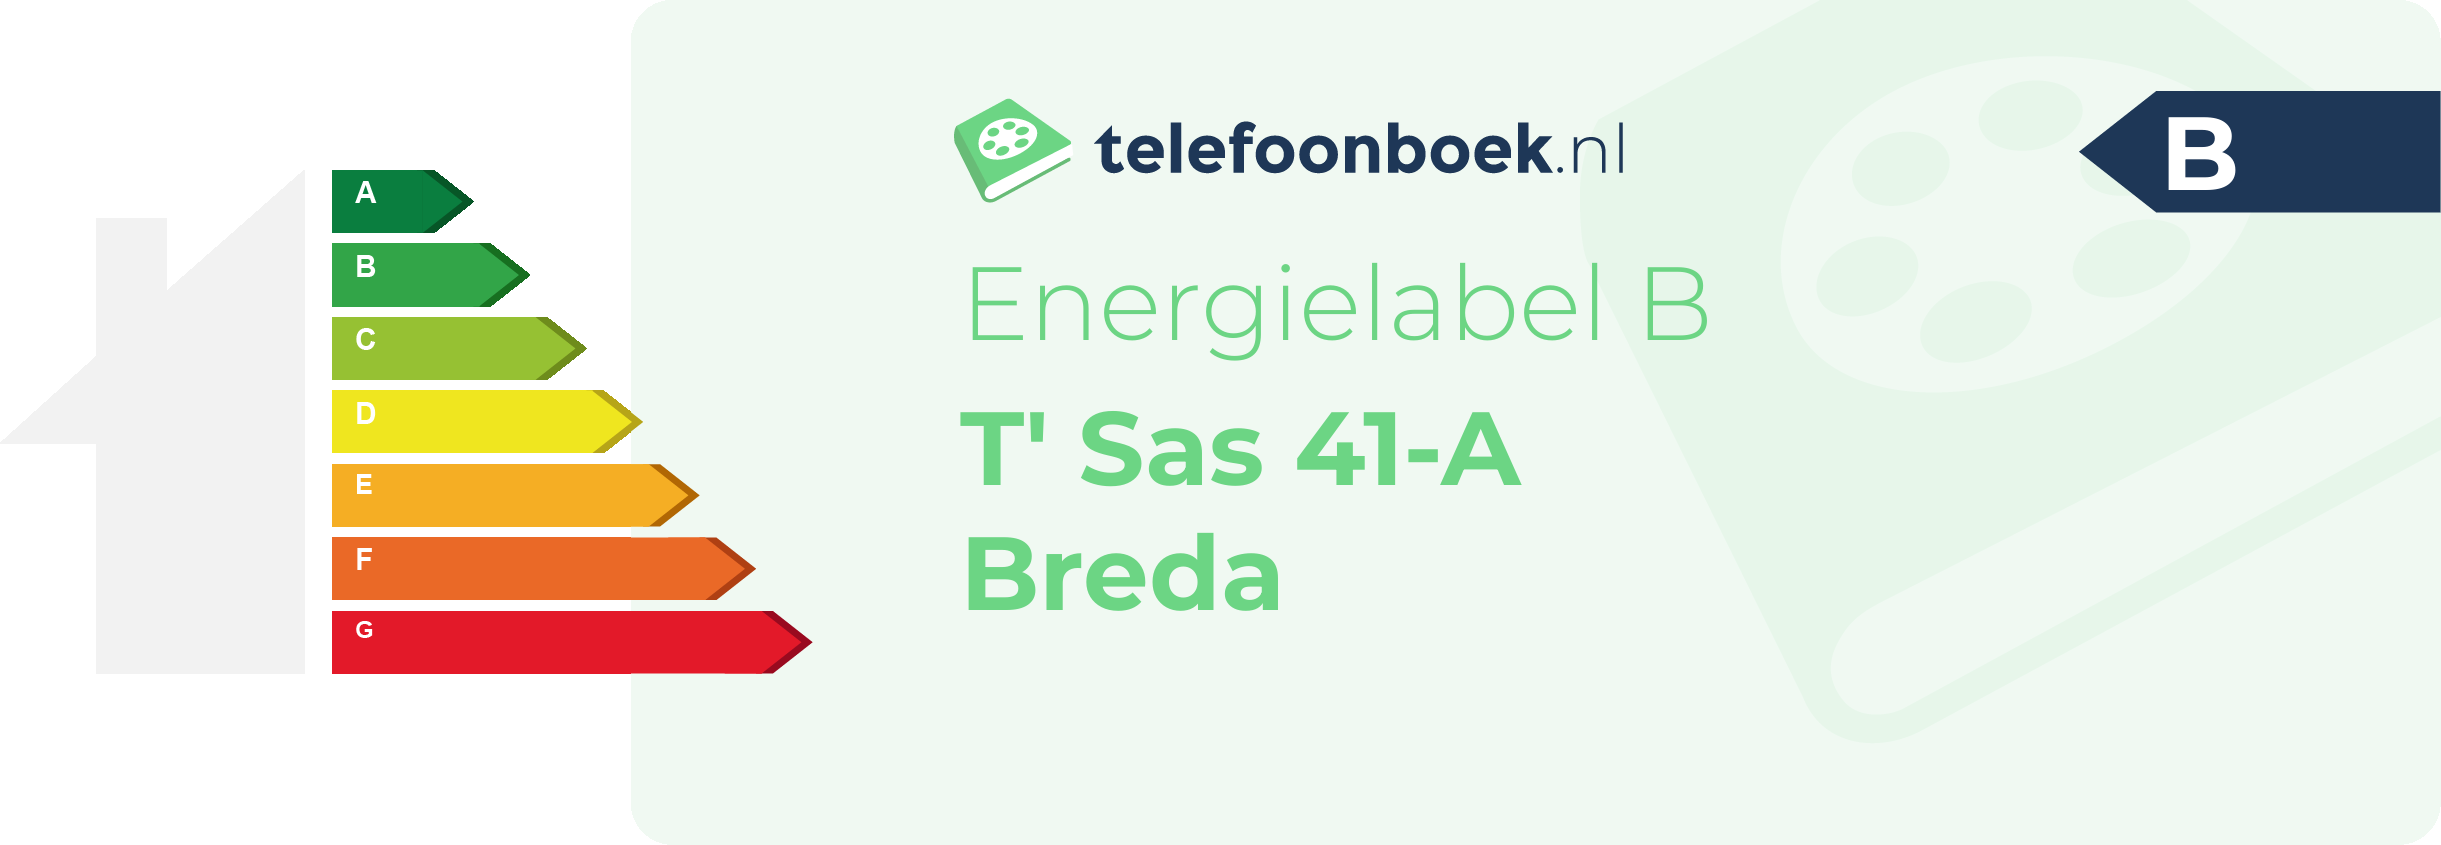 Energielabel T' Sas 41-A Breda